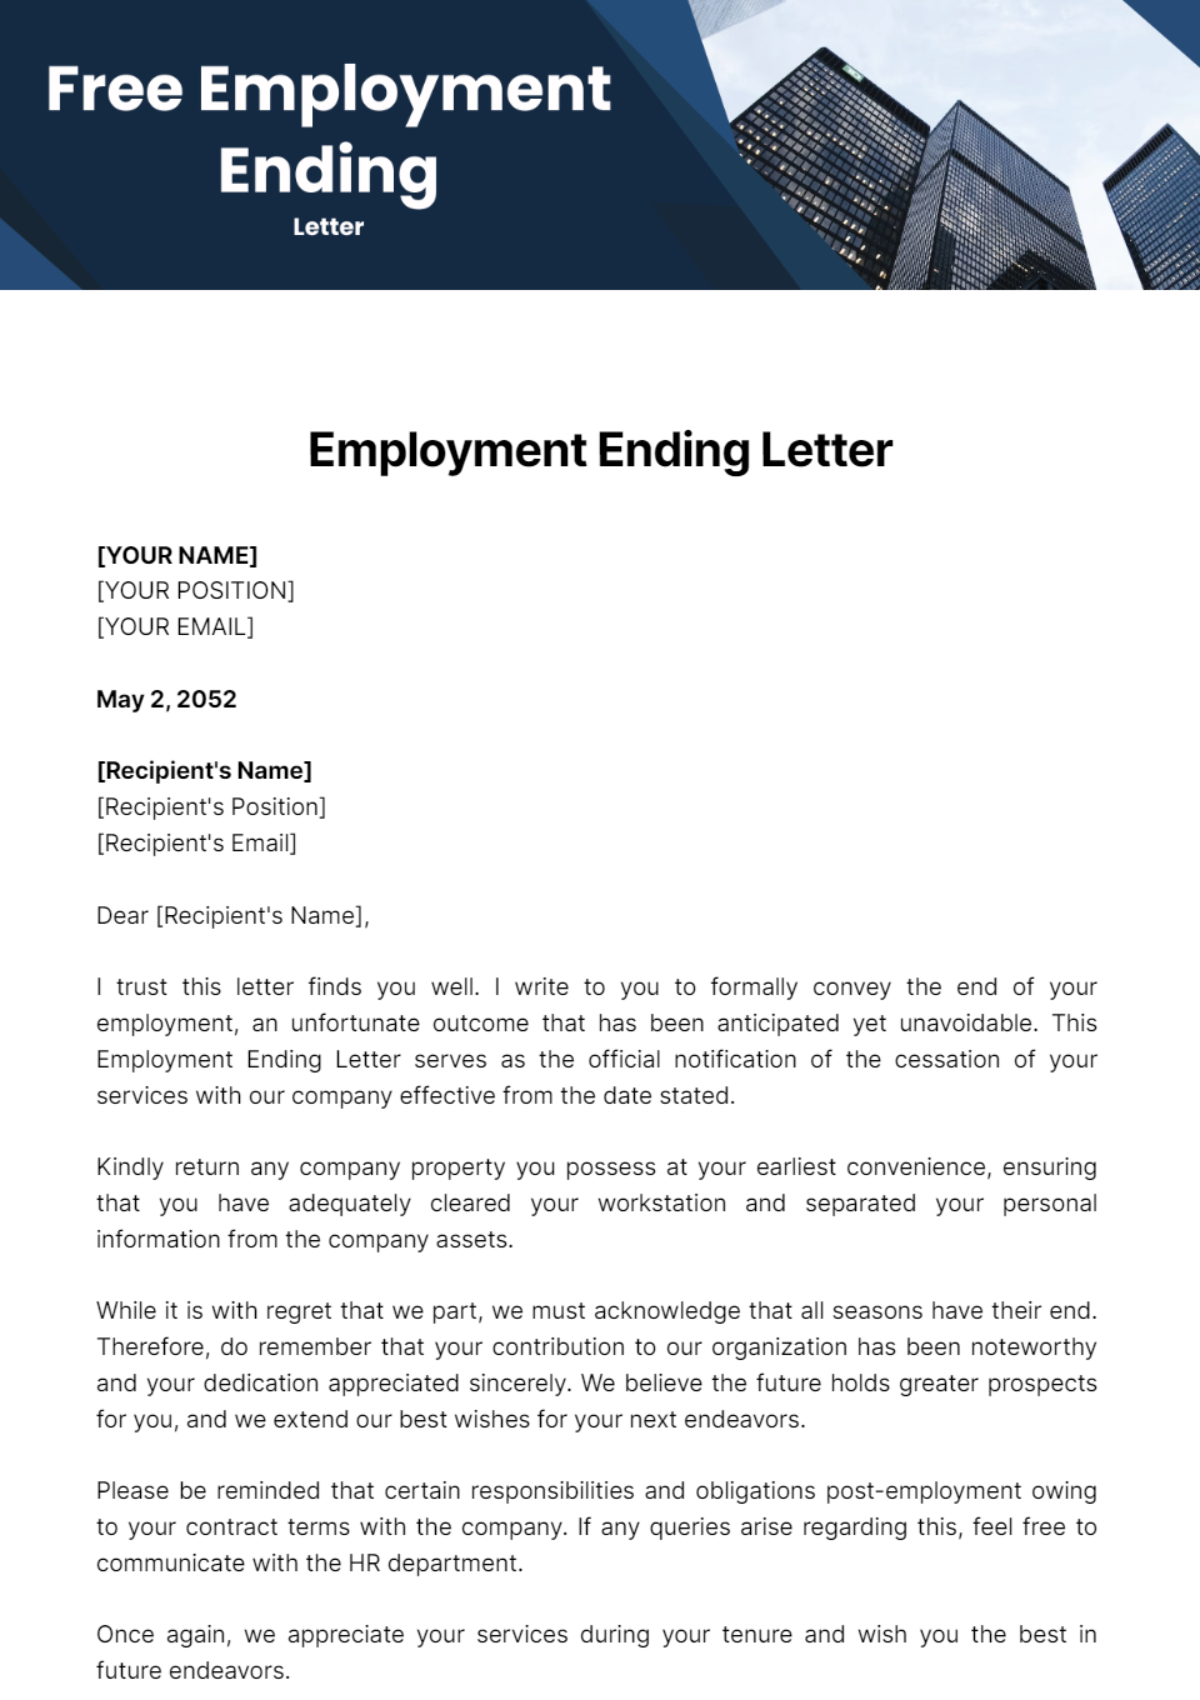 Employment Ending Letter Template